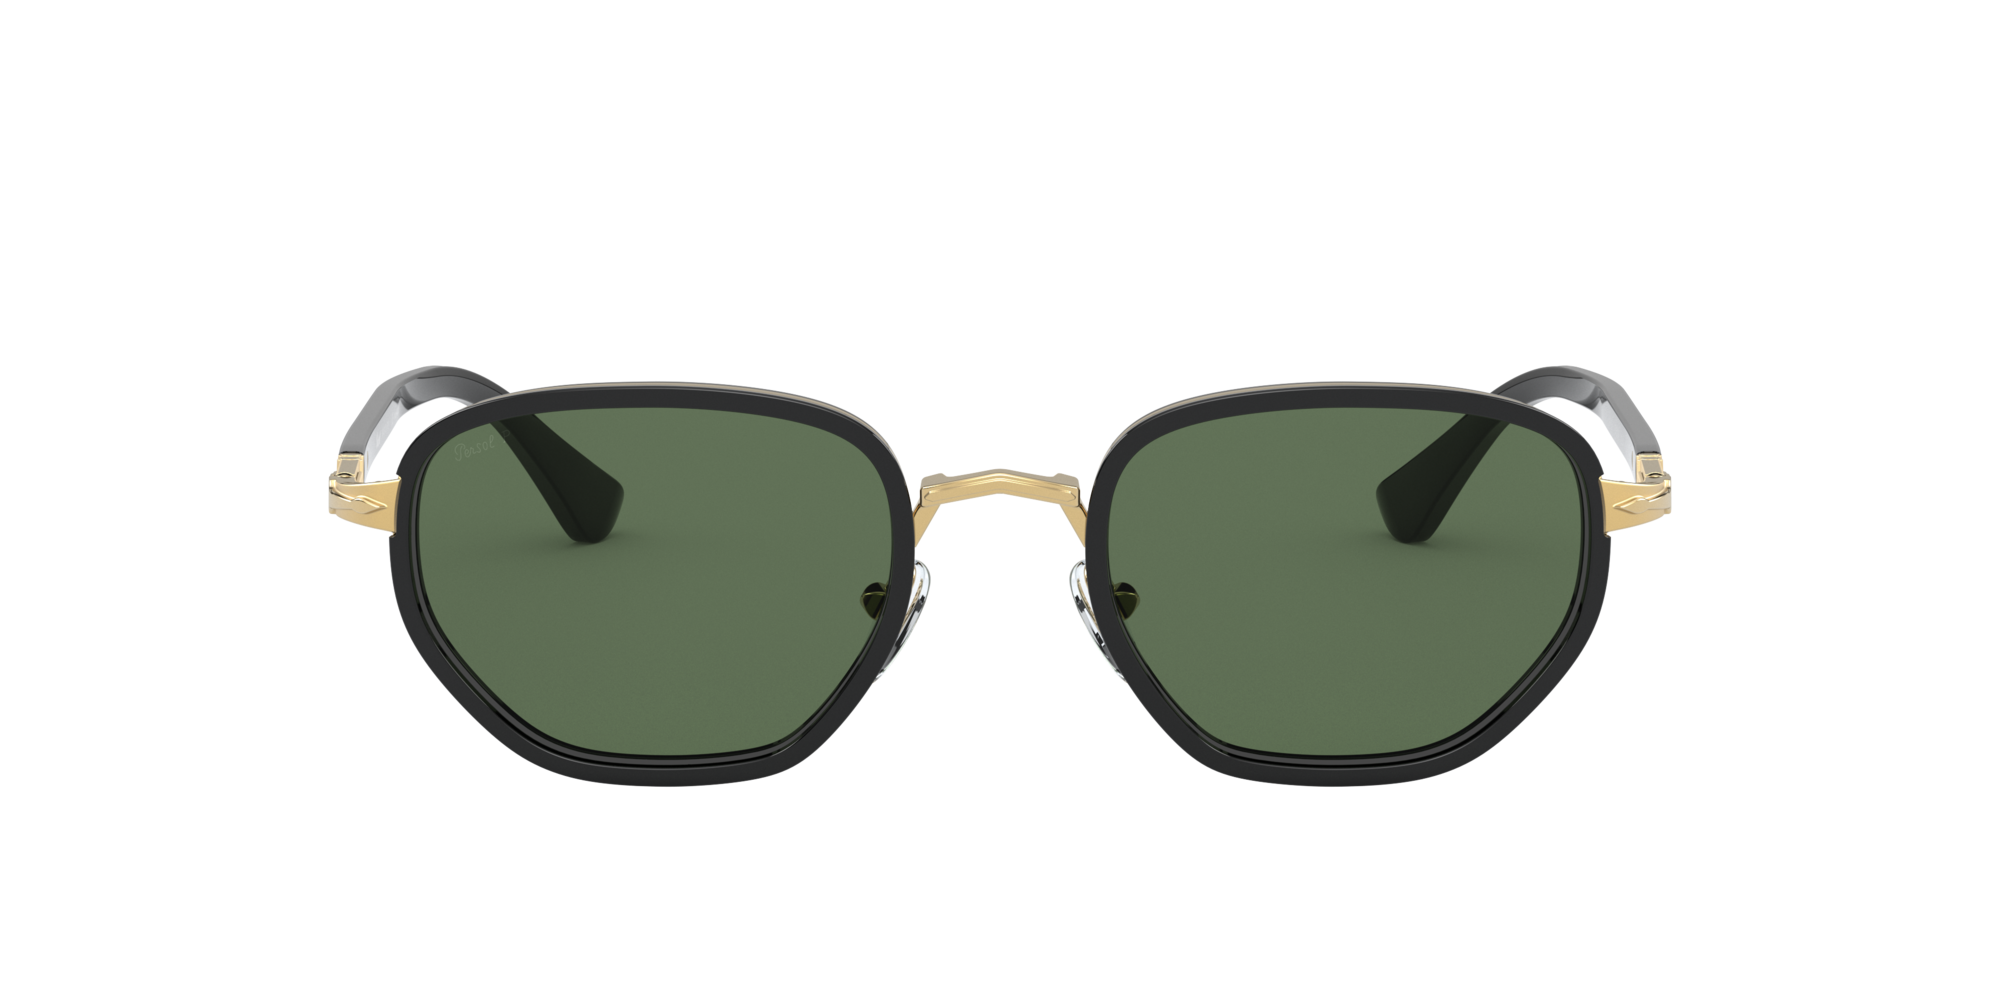 newfeel sunglasses price